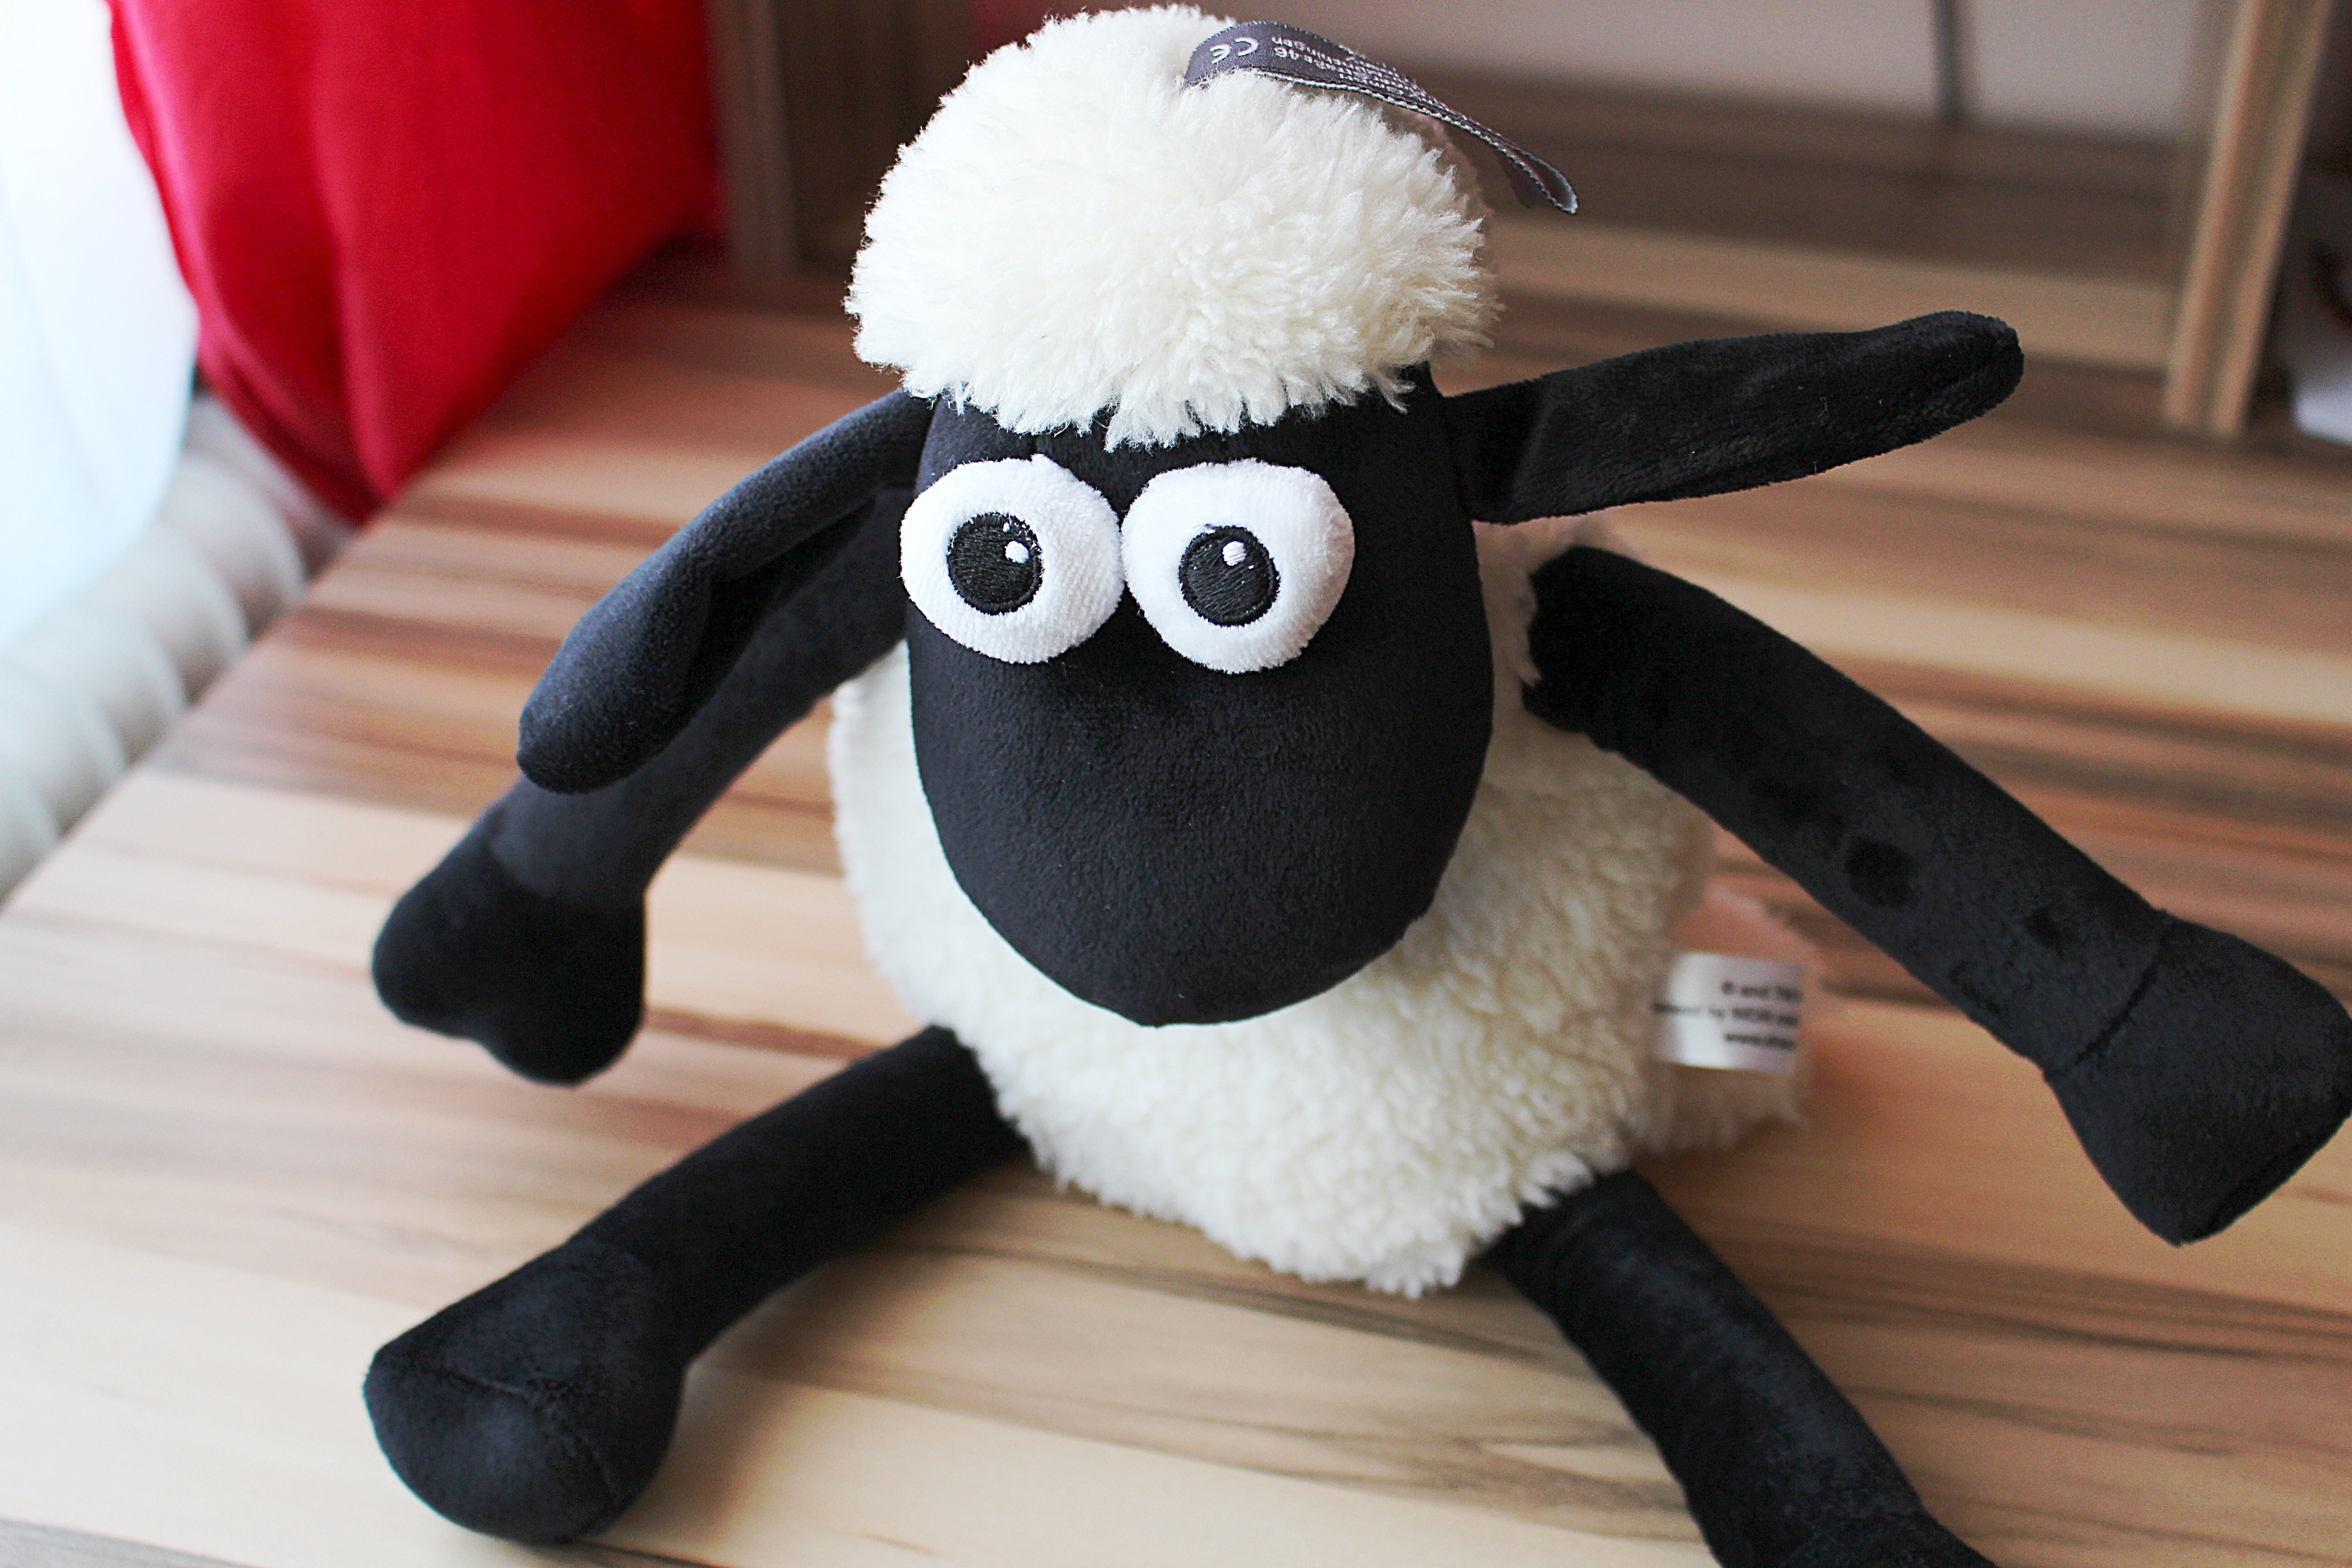 shaun the sheep plush toy